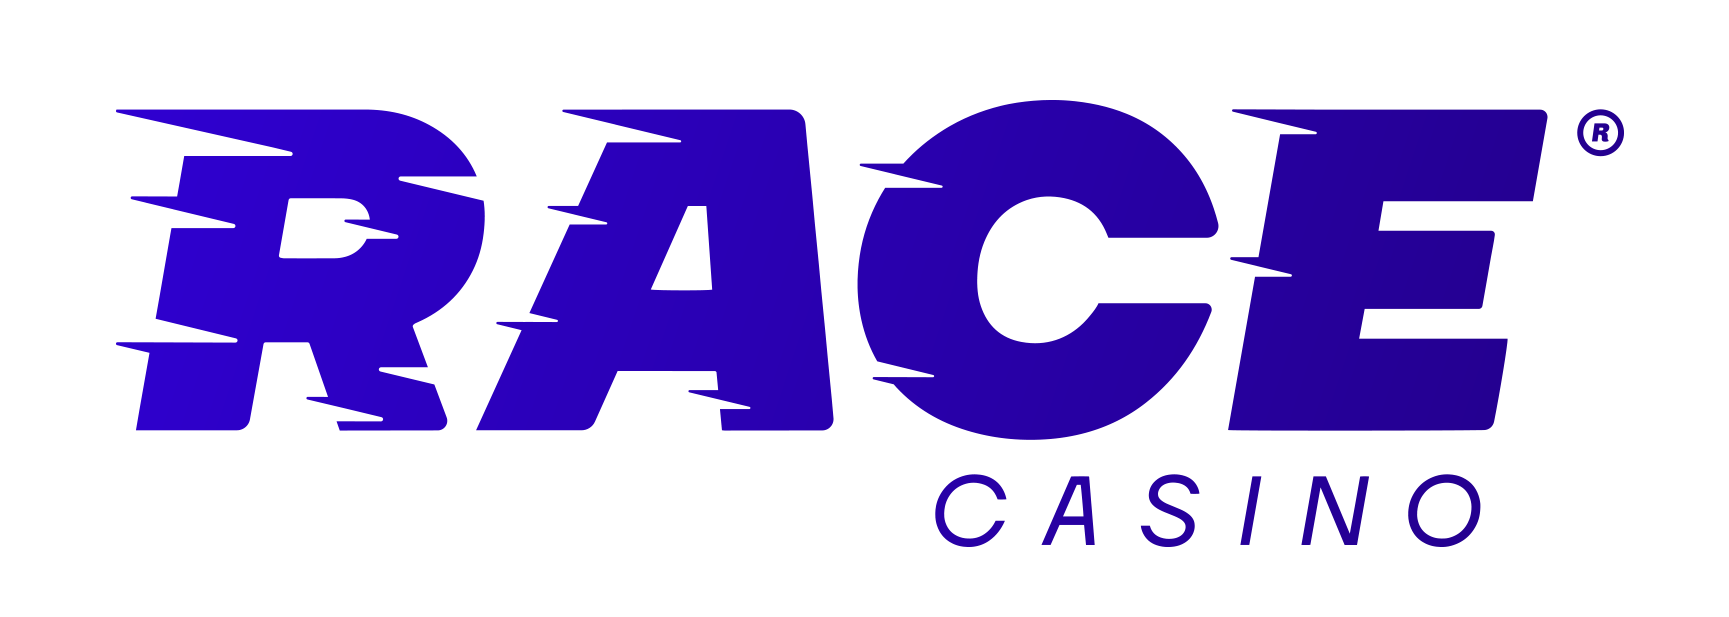 Race Casino Logo